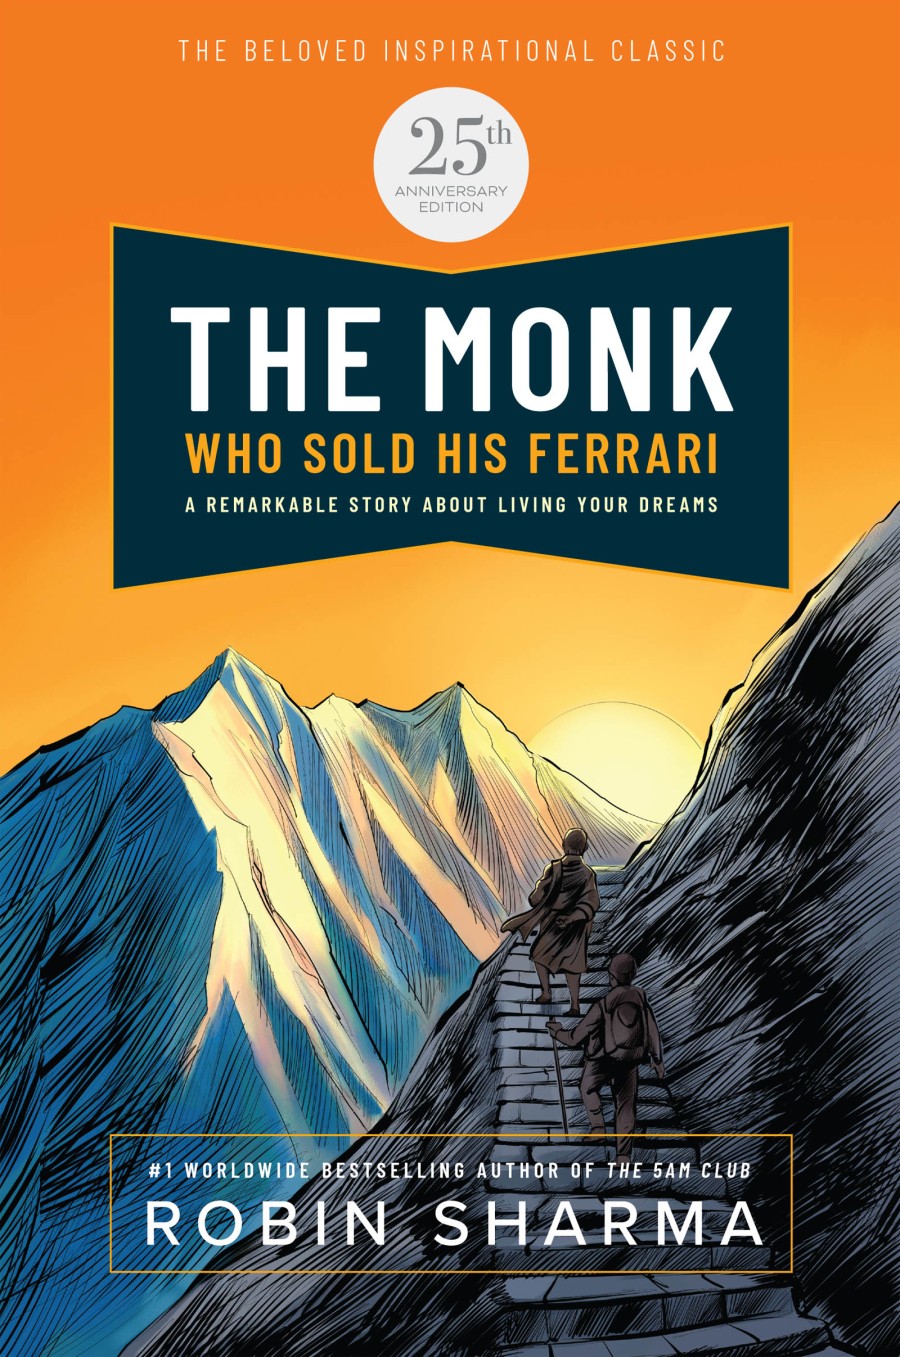 THE MONK WHO SOLD HIS FERRARI